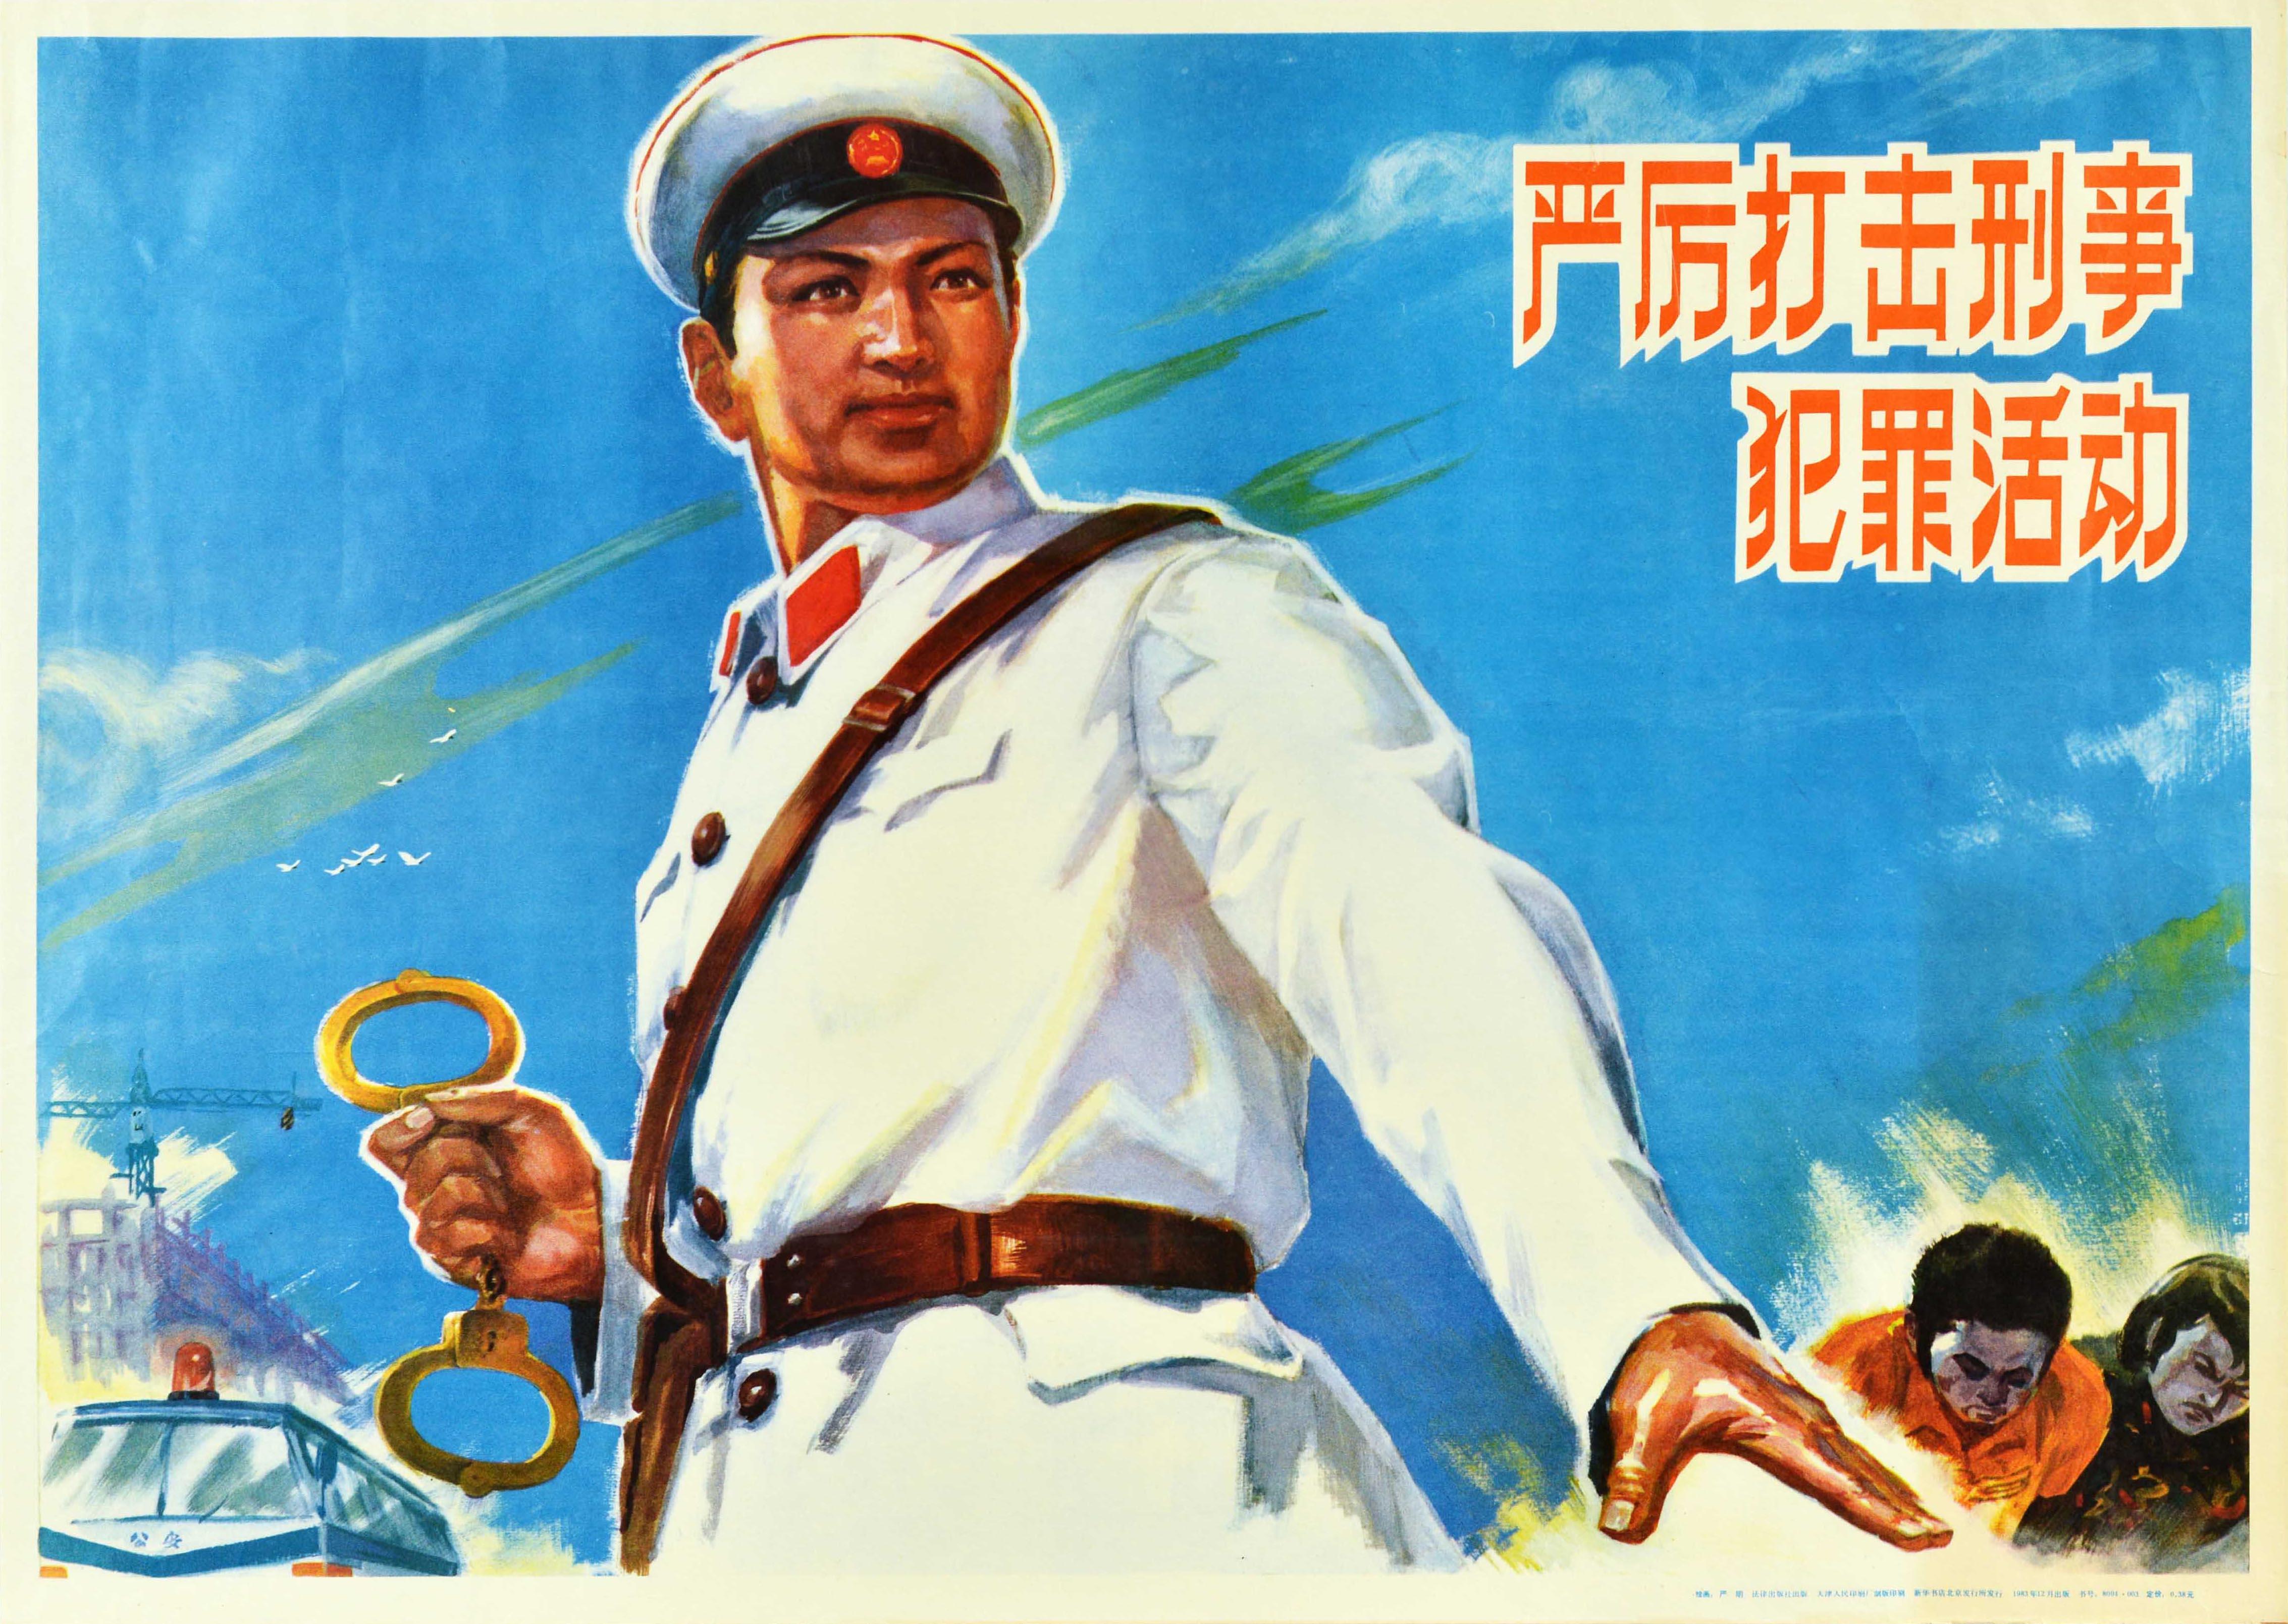 Yan Ming Print -  Original Vintage Propaganda Poster Criminal Activity Crackdown Law Police China